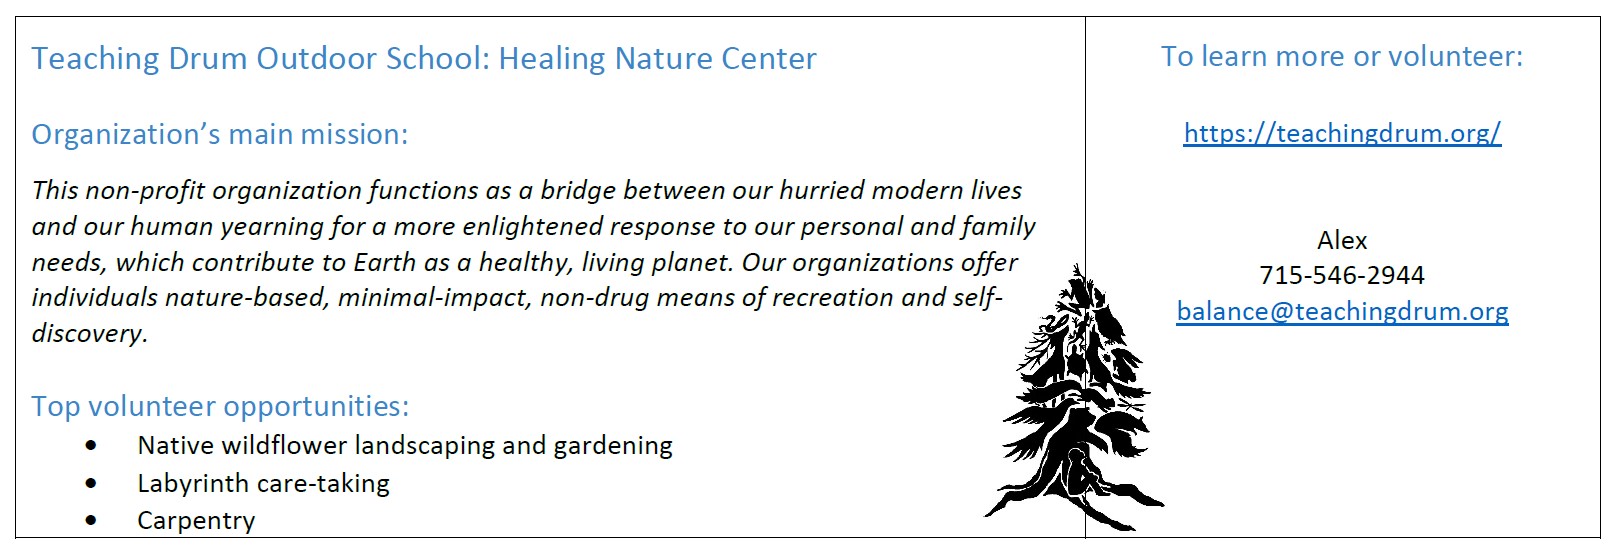 Volunteer opportunities at the Healing Nature Center